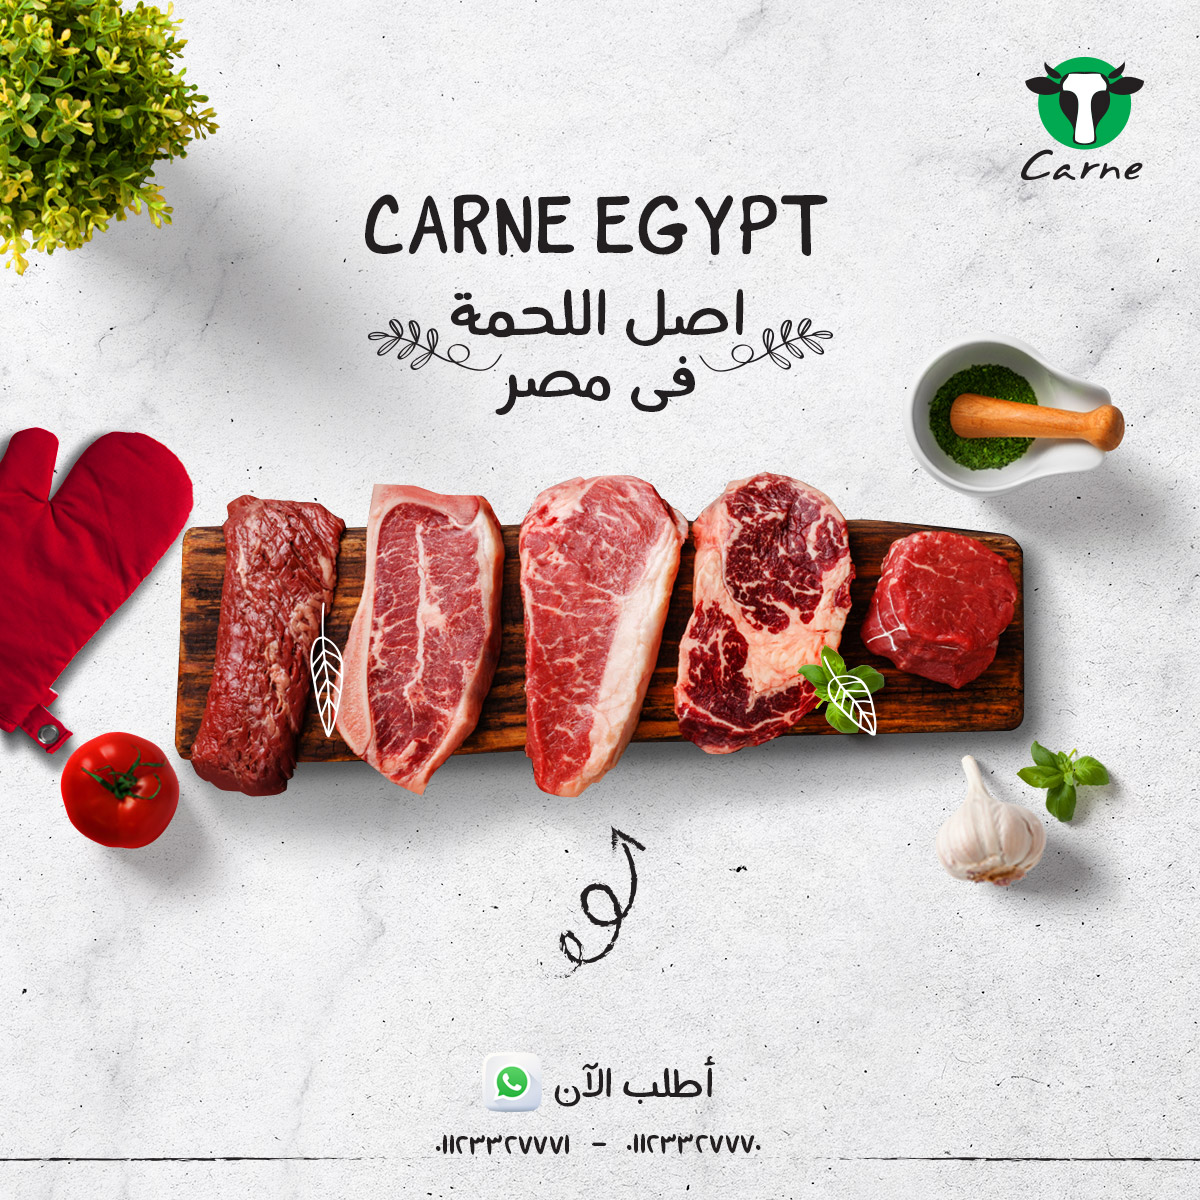 Carne Egypt Copywriting Creative Photo Manipulation Meat